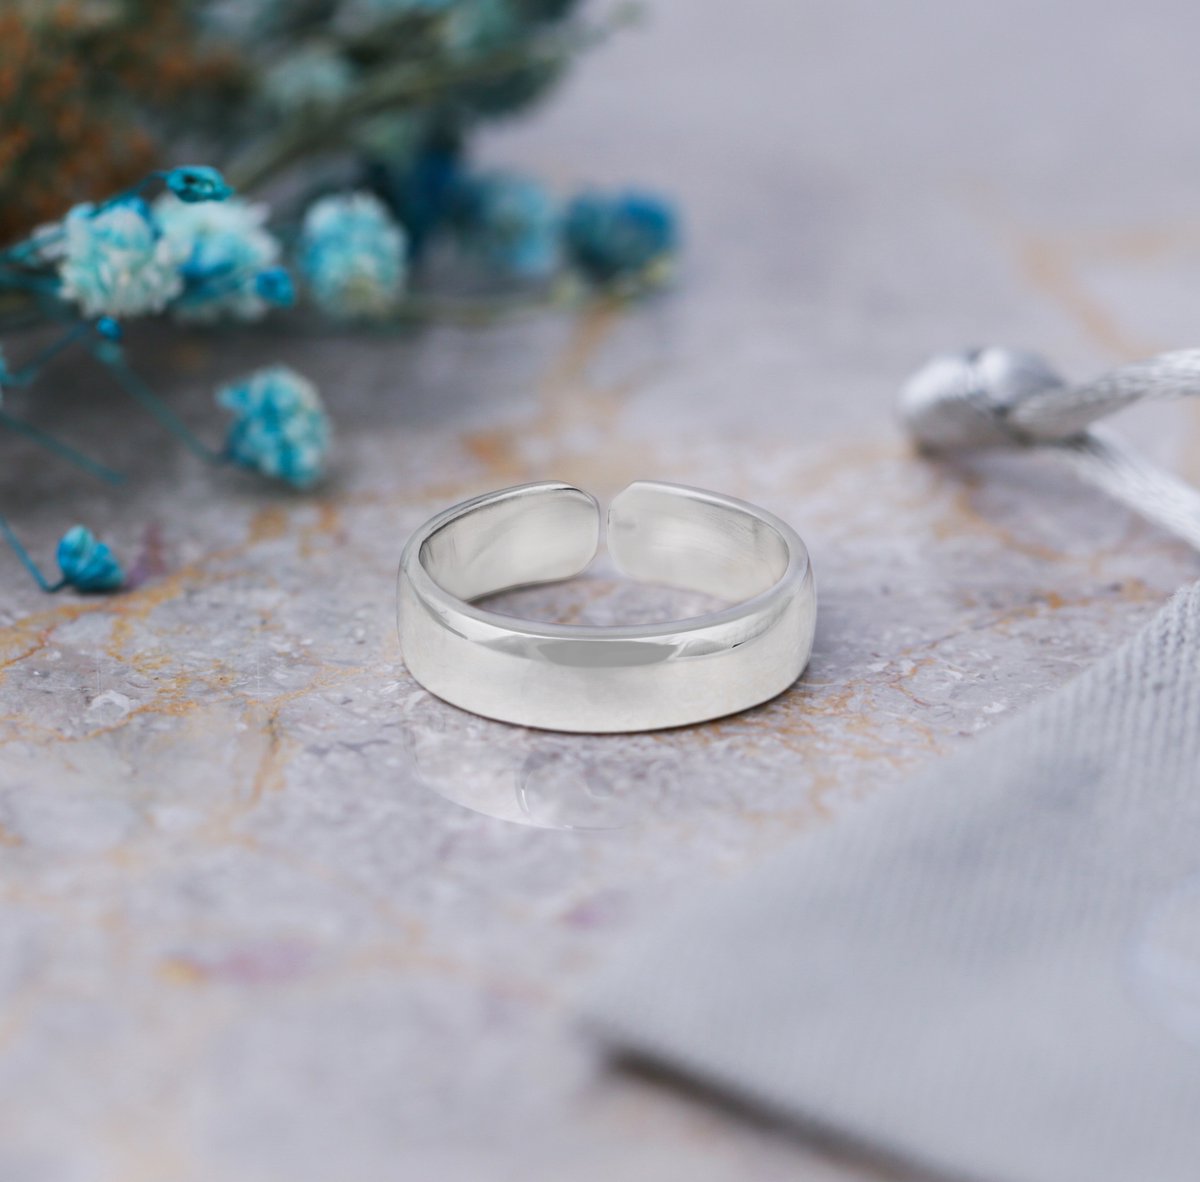 Polished | Packaged | Perfection 

l8r.it/t6zq

#jewellerygift #weddingband #adjustablering #silverjewellery #handmaderings #giftsforher #birthdaygifts